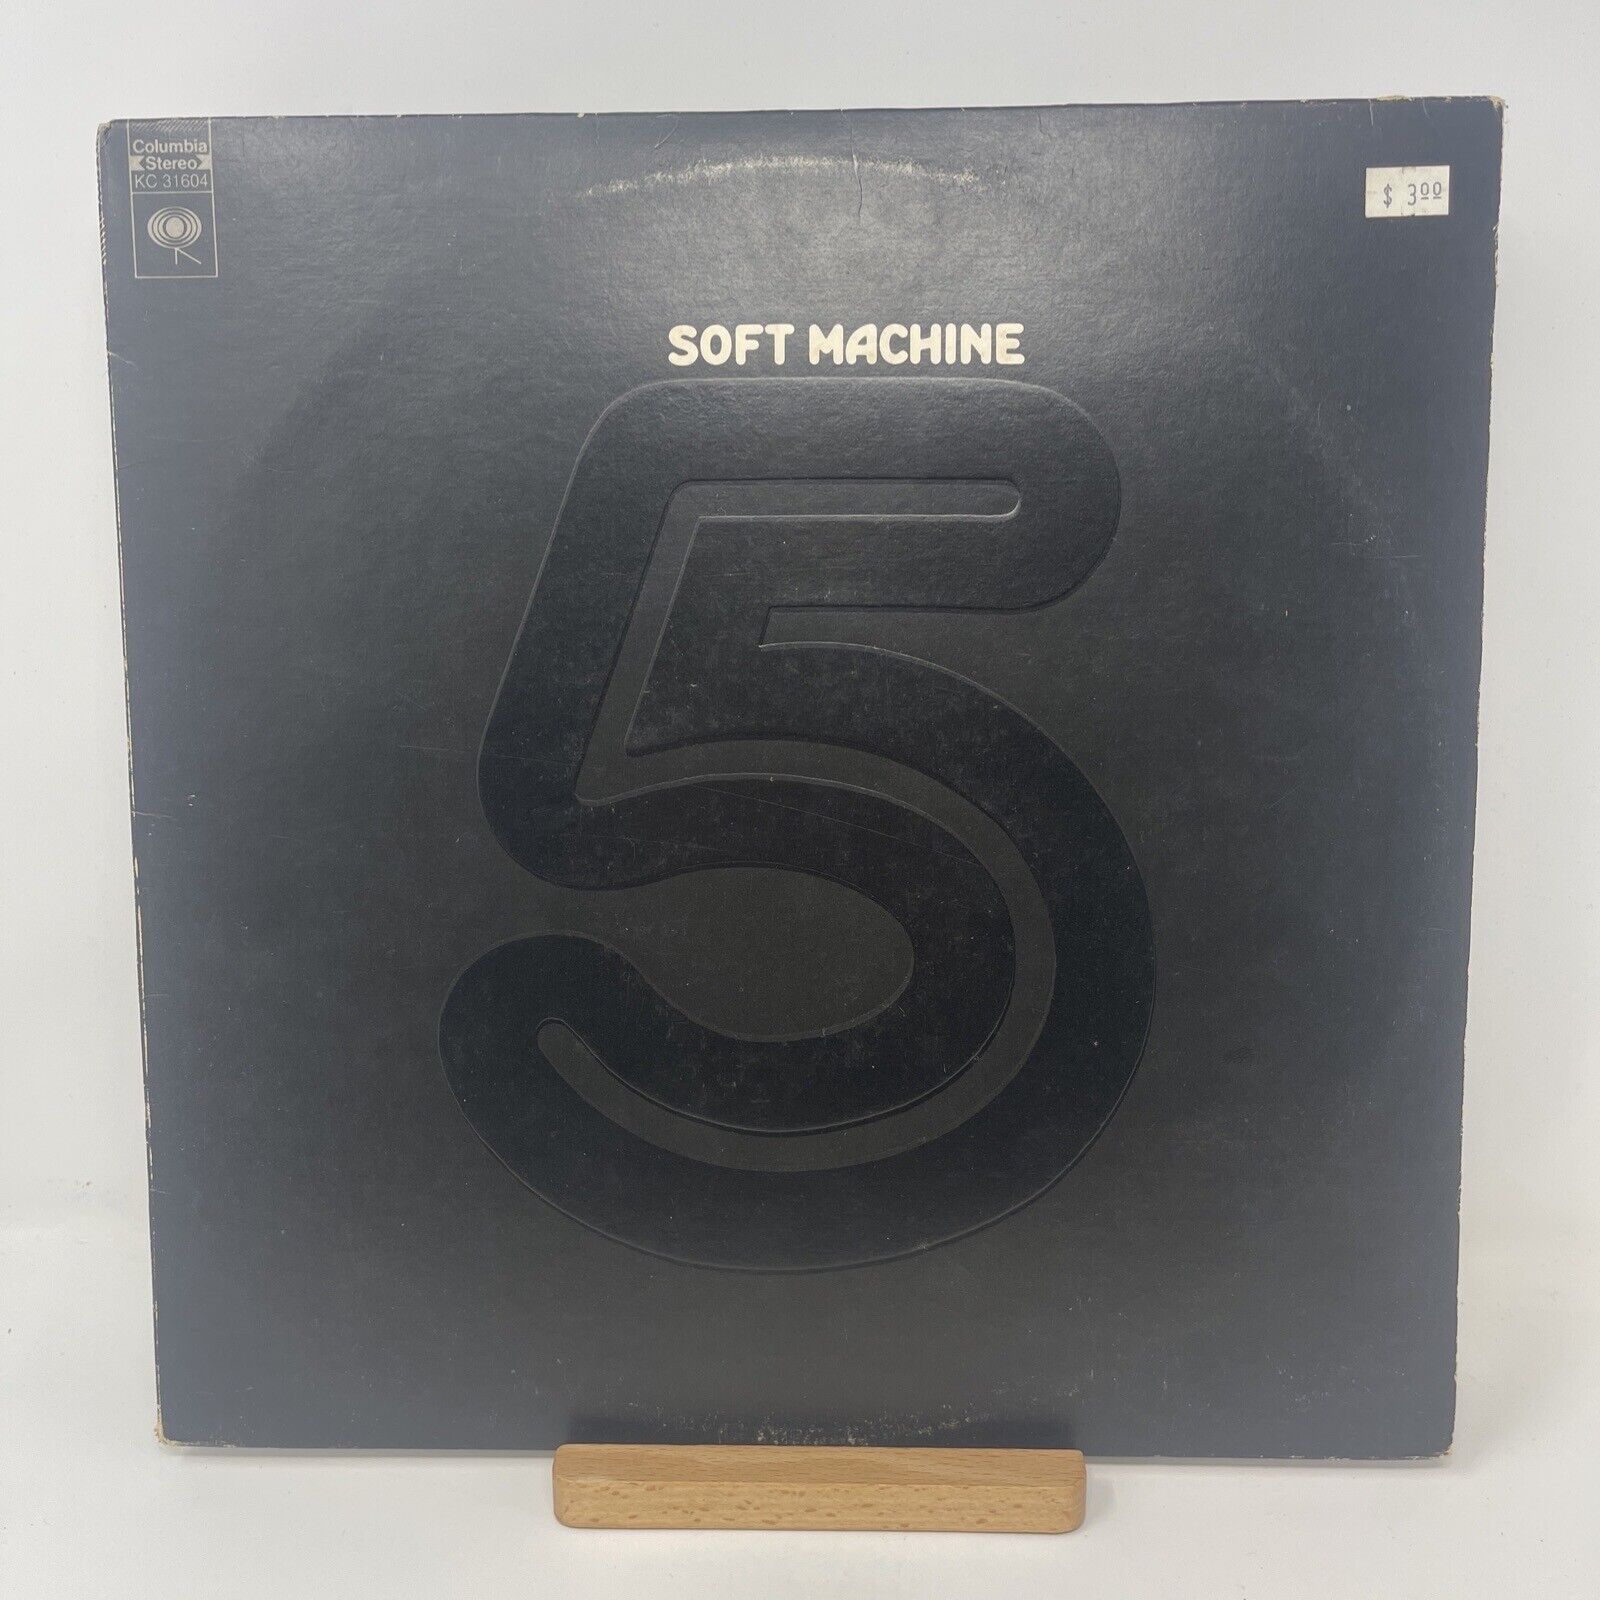 Soft Machine 5 Vinyl LP, Columbia KC31604 1972